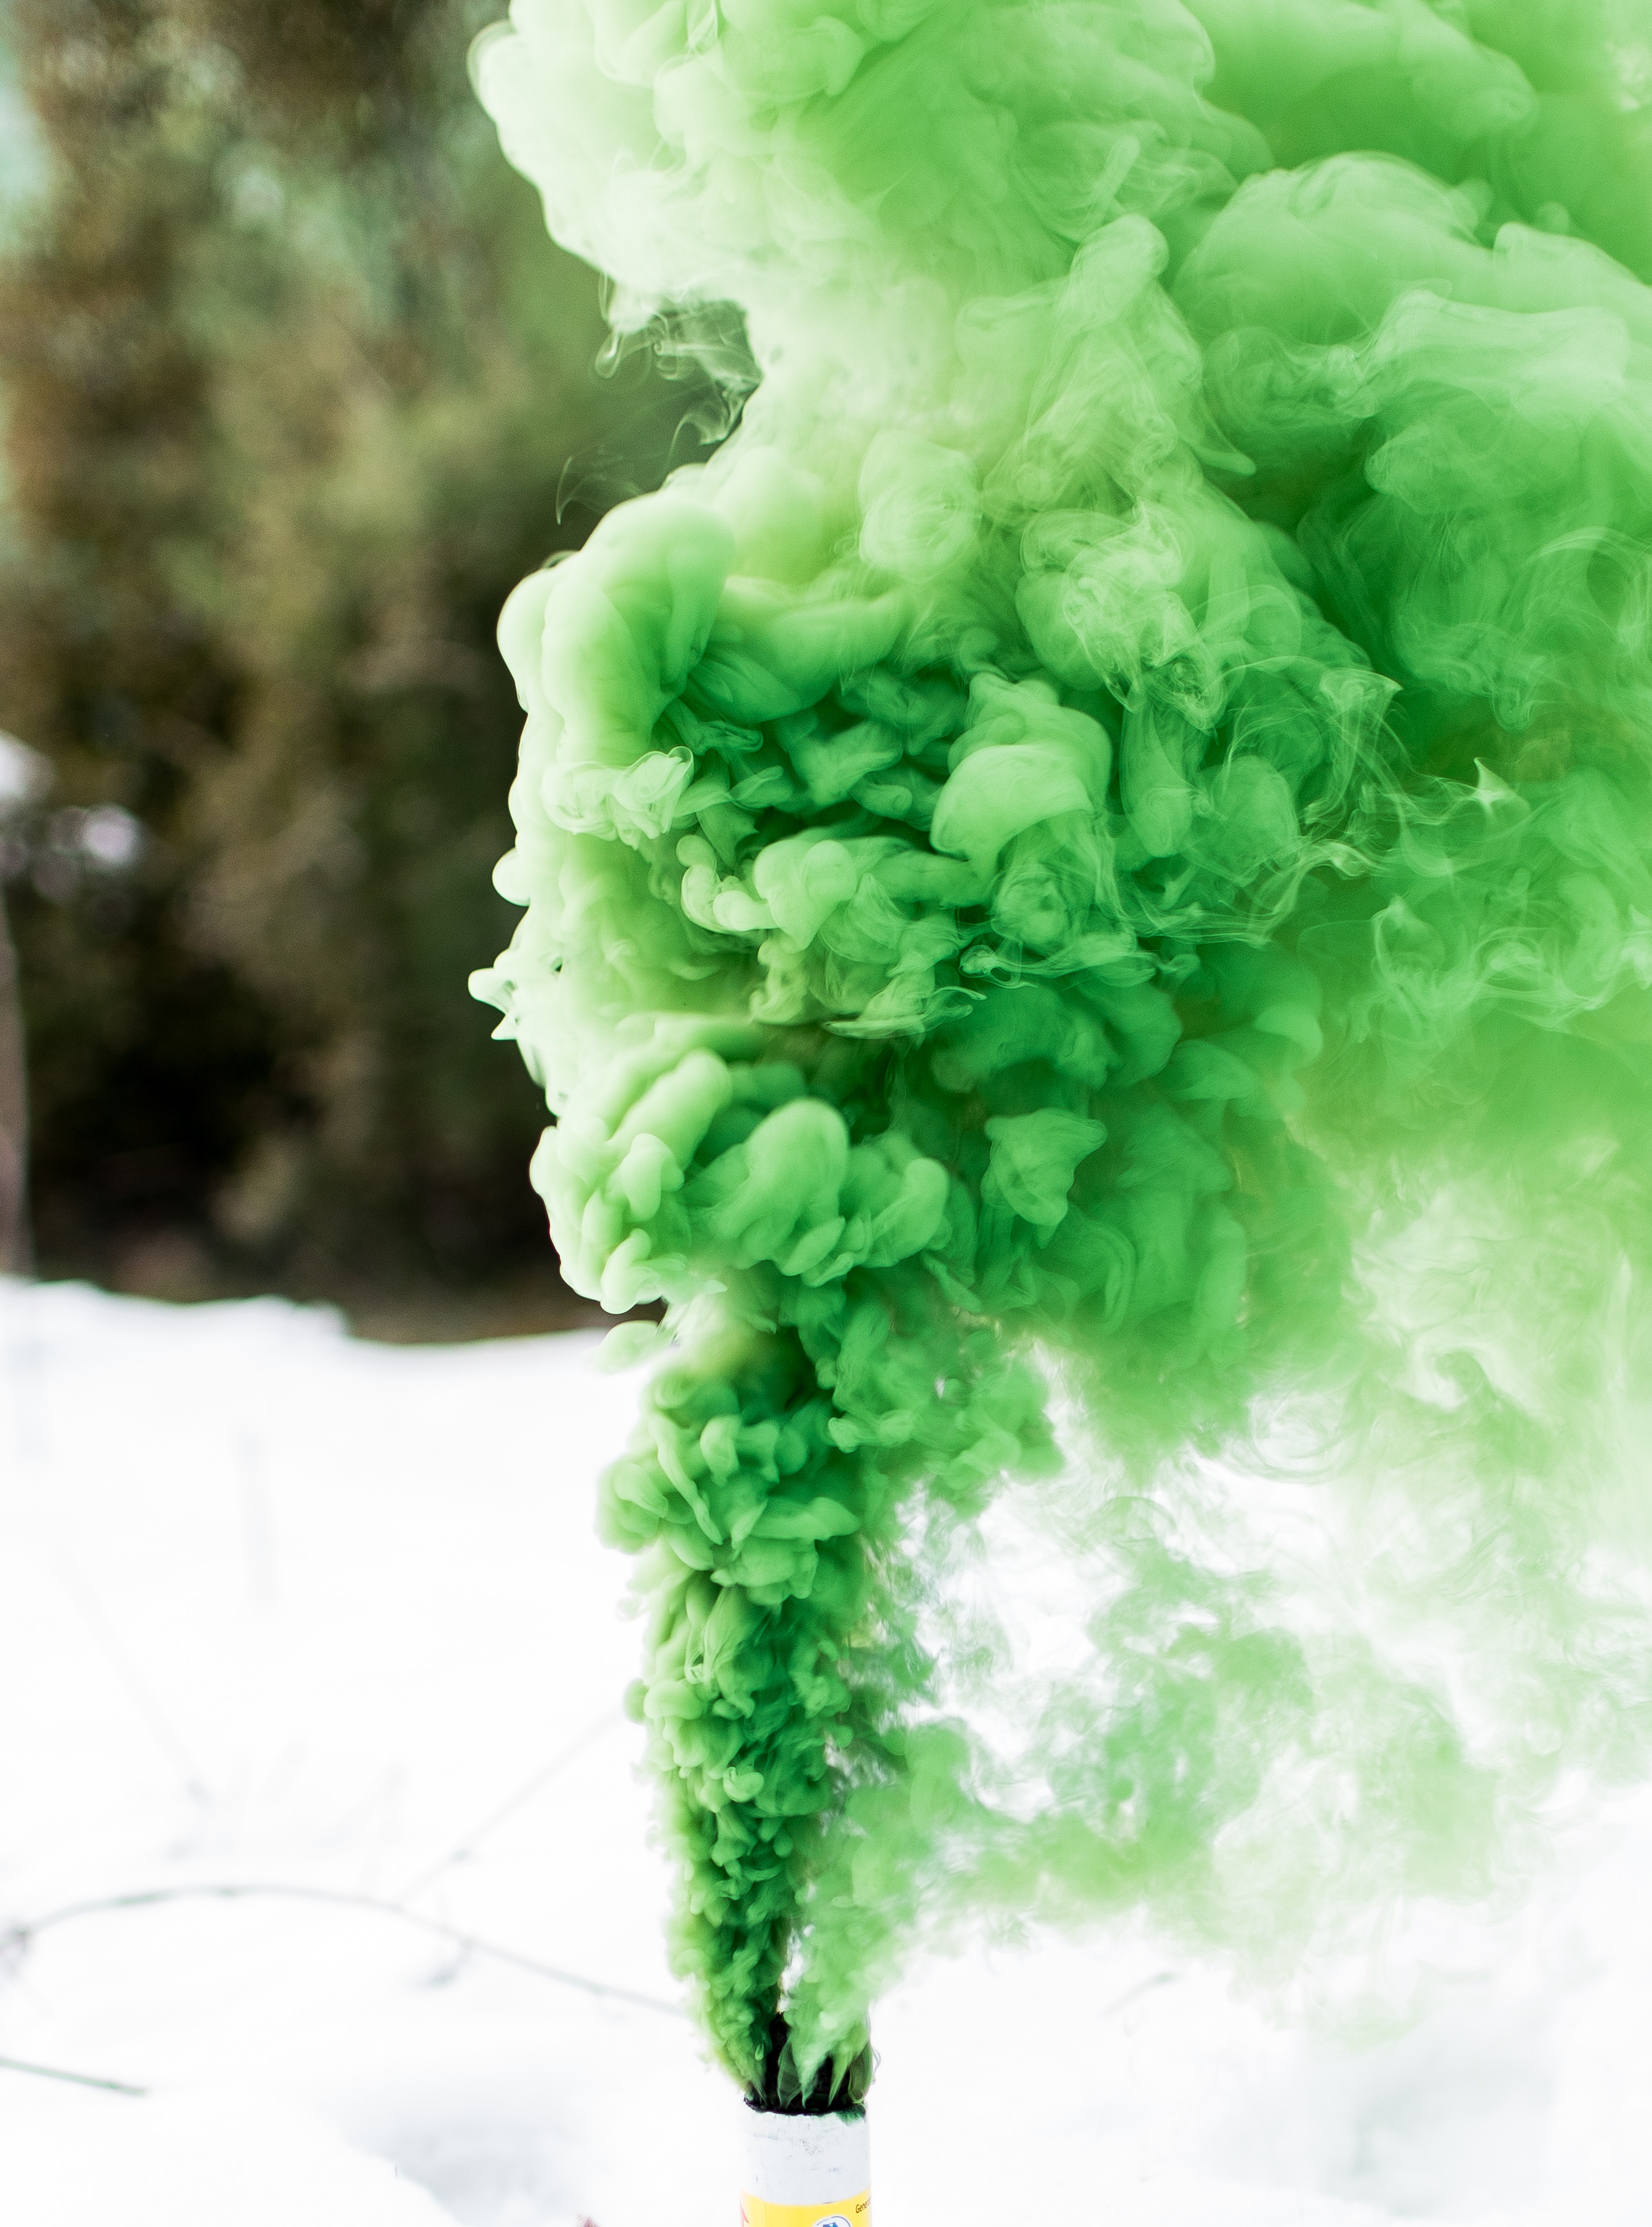 coloured smoke, miscellanea, green, smoke, miscellaneous, colored smoke images